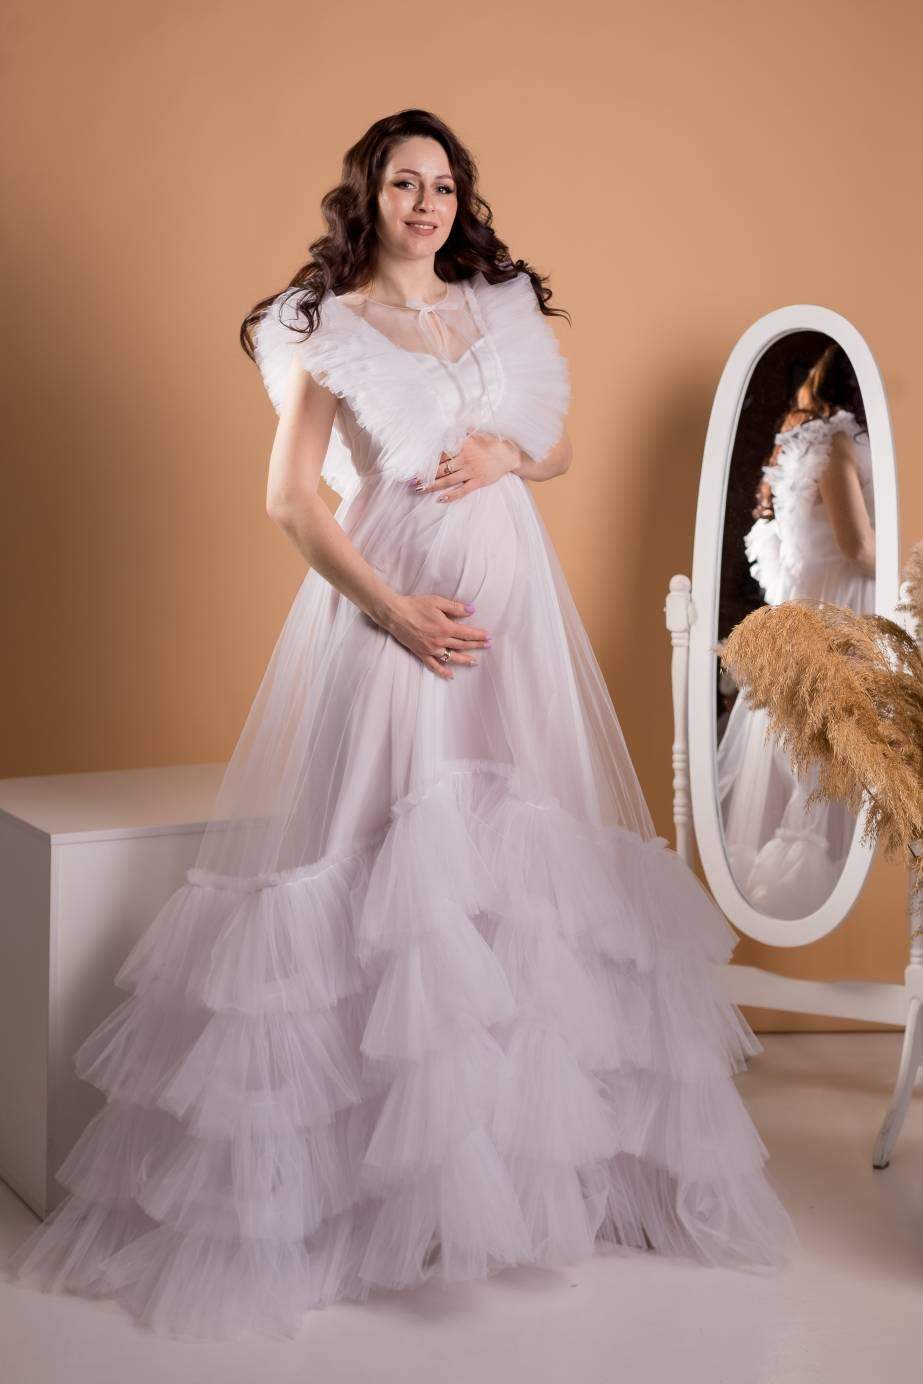 White Tulle Maternity Dress, Photoshoot Gown, White Sheer Dress, White